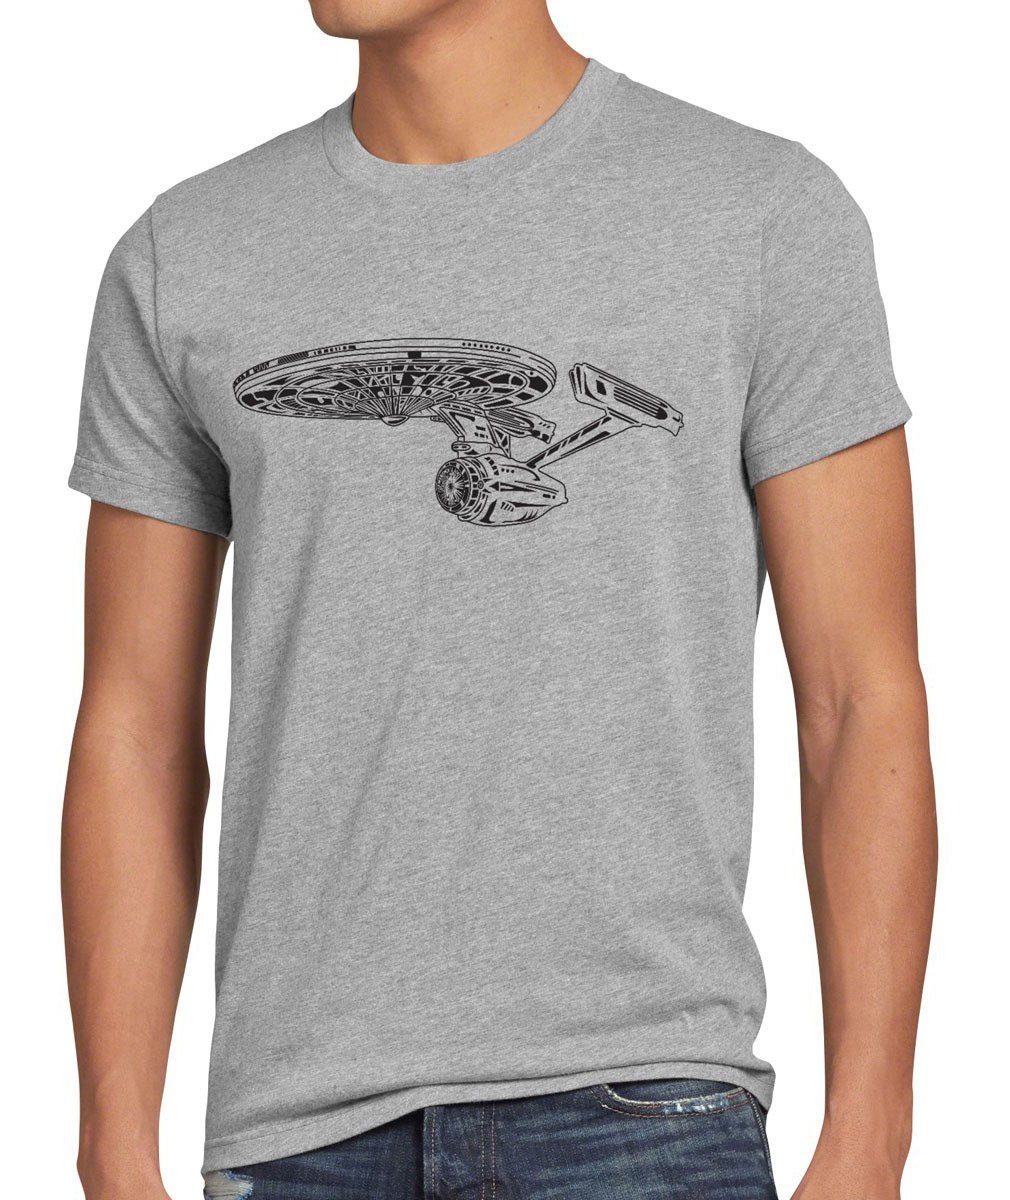 trek wars spock style3 meliert T-Shirt raumschiff grau Sci-Fi voyager Trekkie Herren enterprise star Print-Shirt